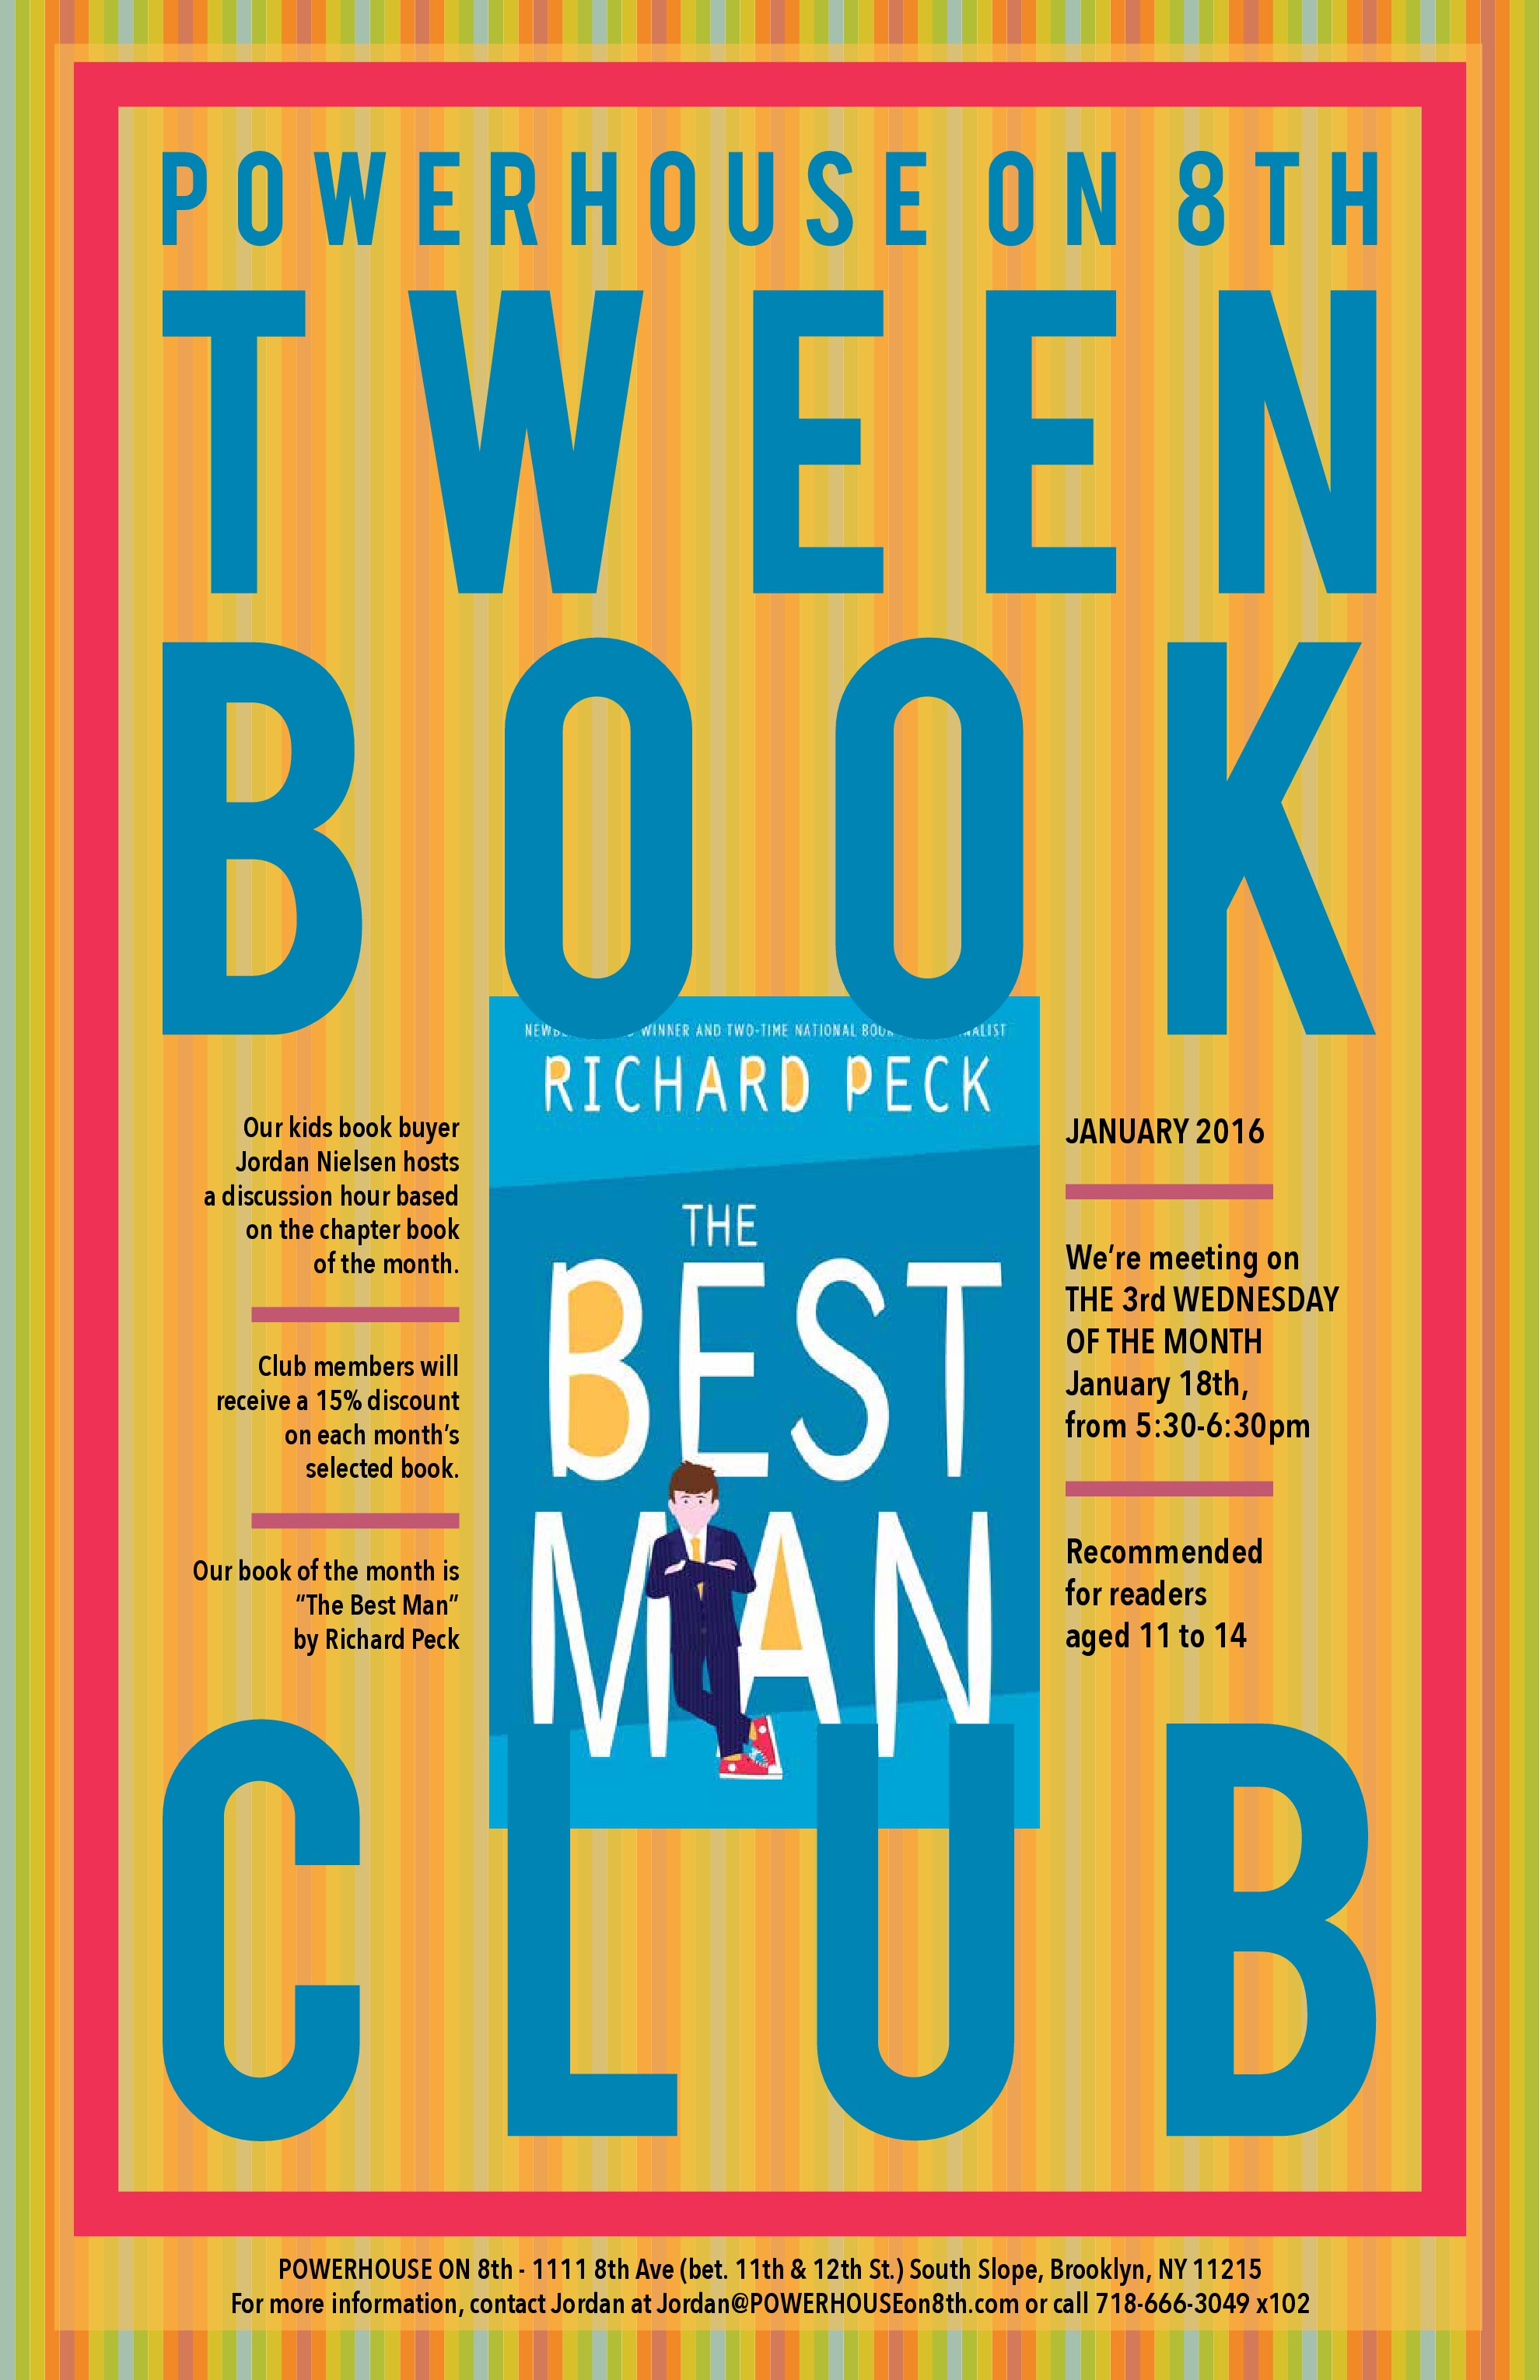 Tween Book Club: The Best Man by Richard Peck